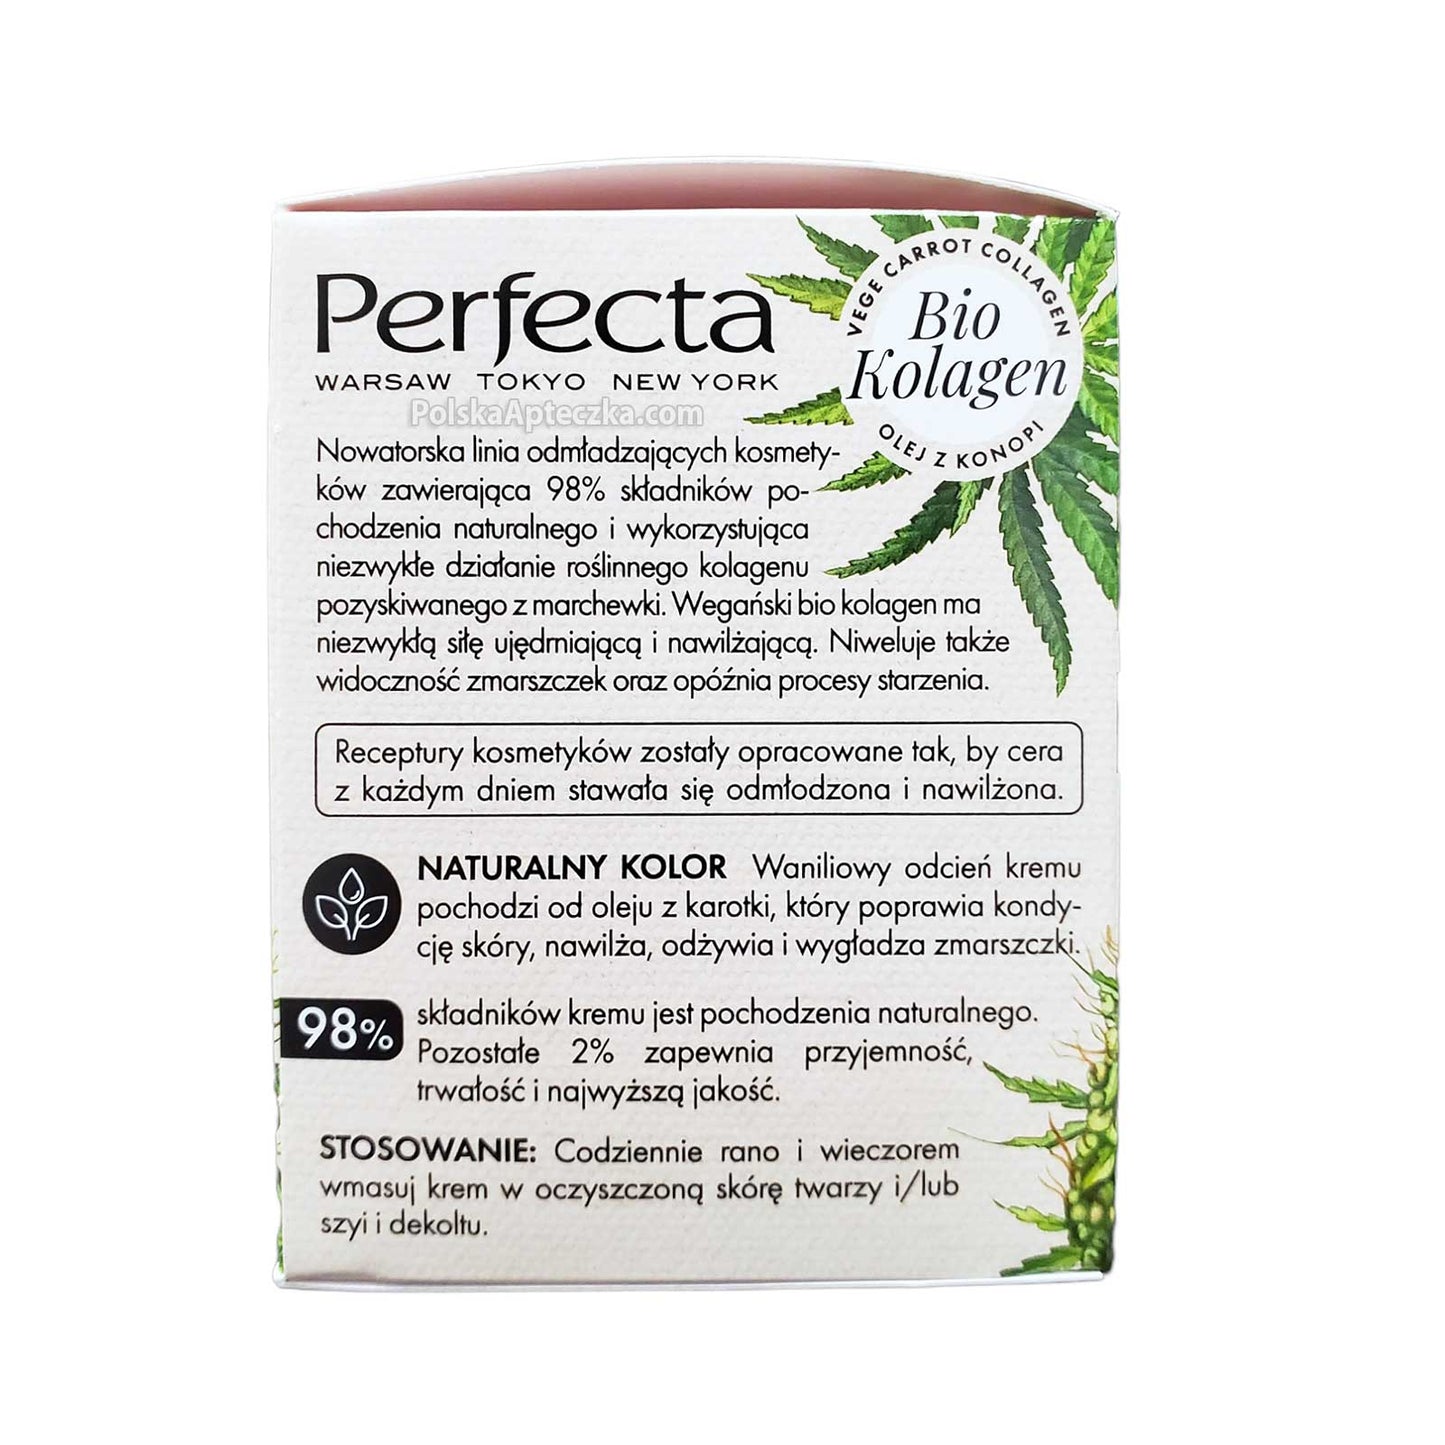 Perfecta, Bio Collagen 60+ anti-wrinkle day and night cream, 50ml